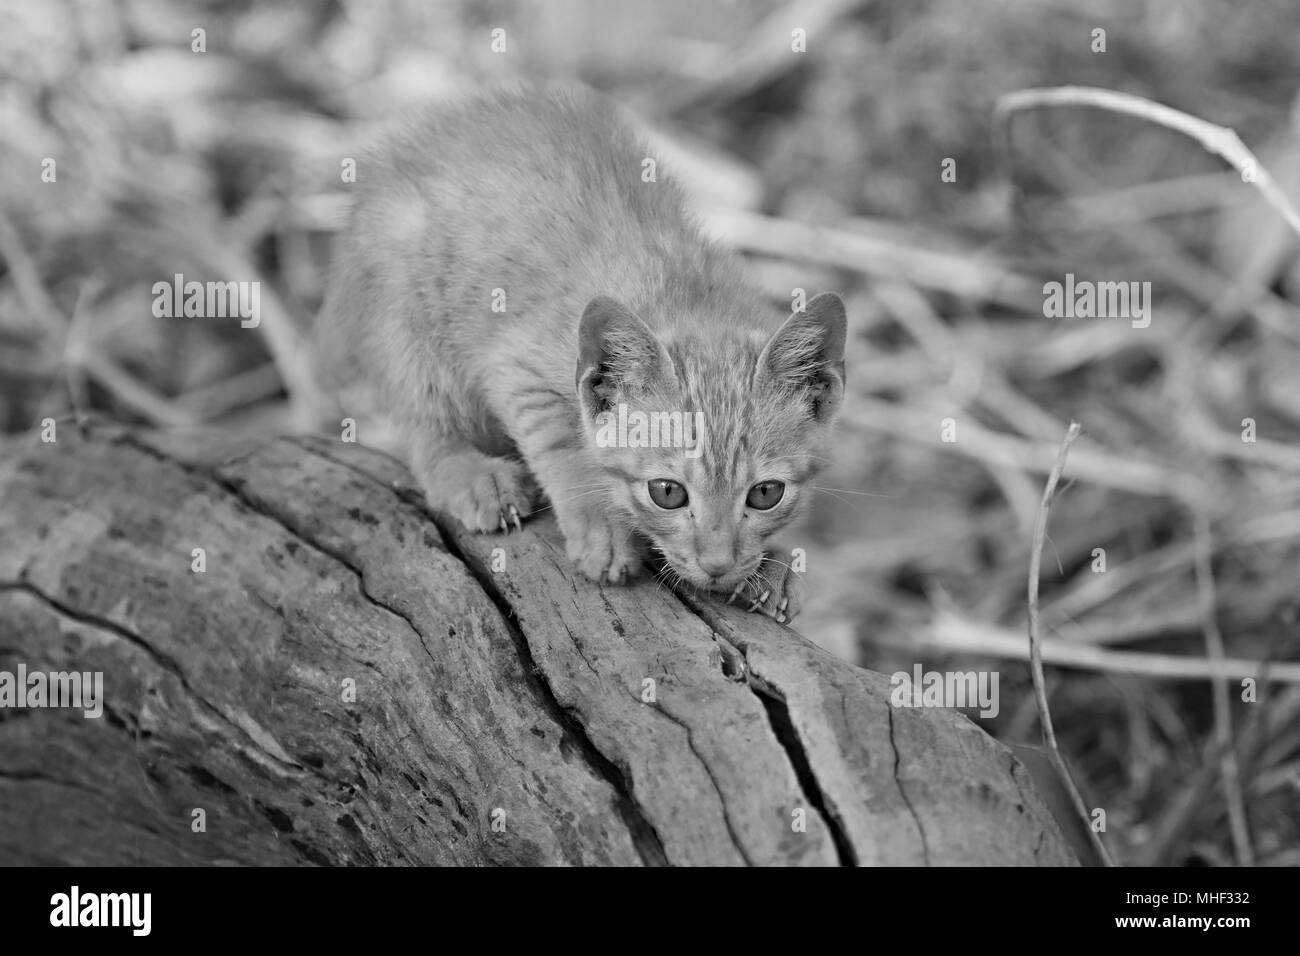 Innocent looking orange tabby kitten on a dried bark of a tree Stock Photo